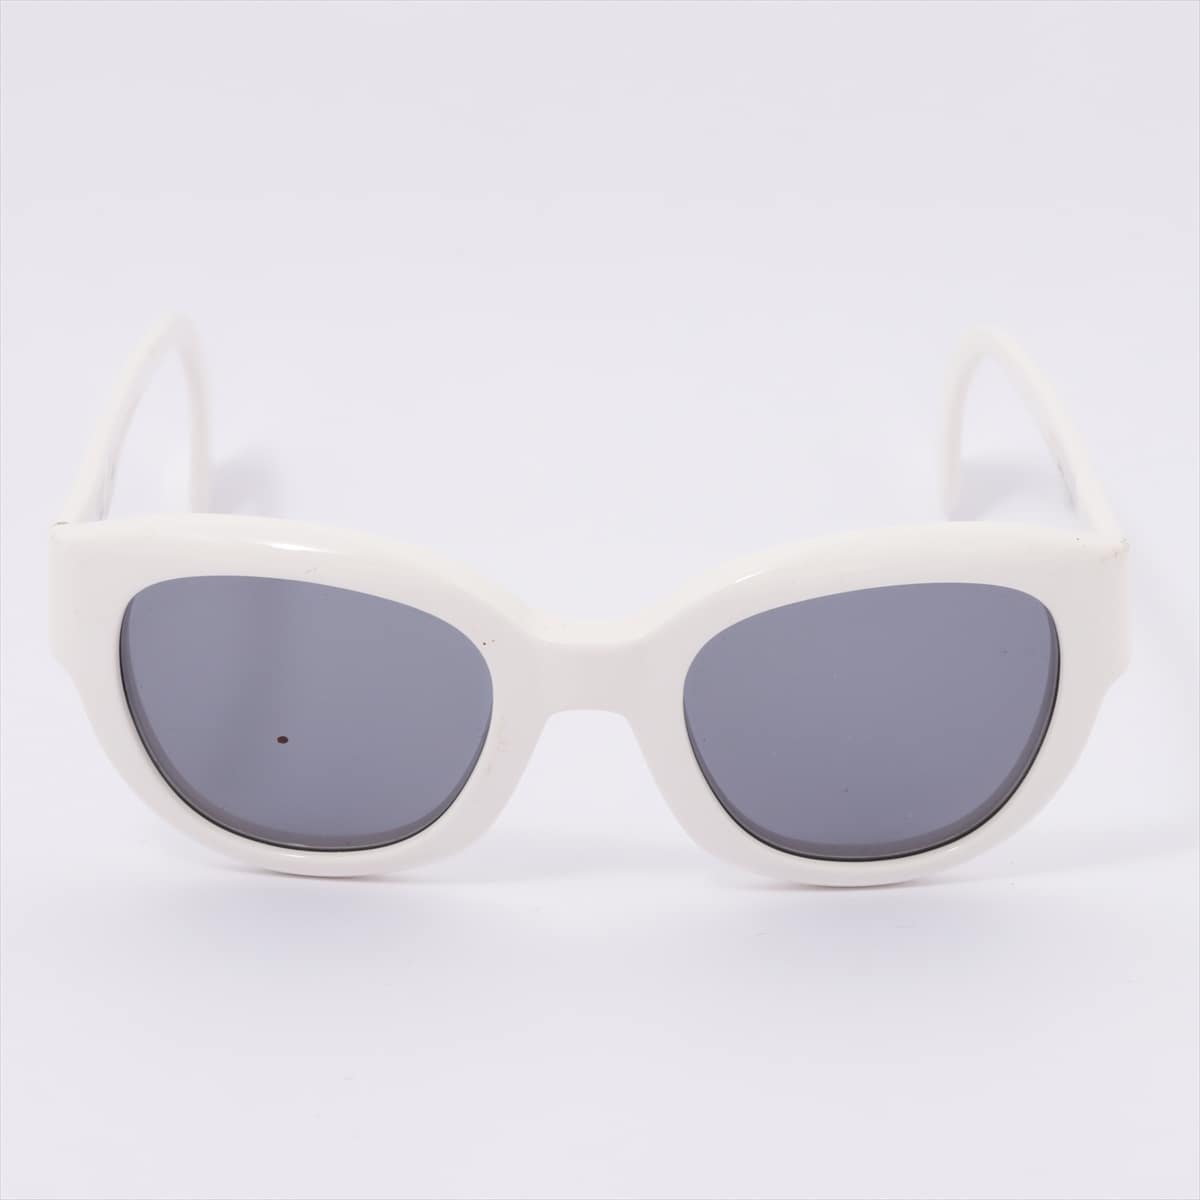 Chanel 05247 Sunglasses Plastic White